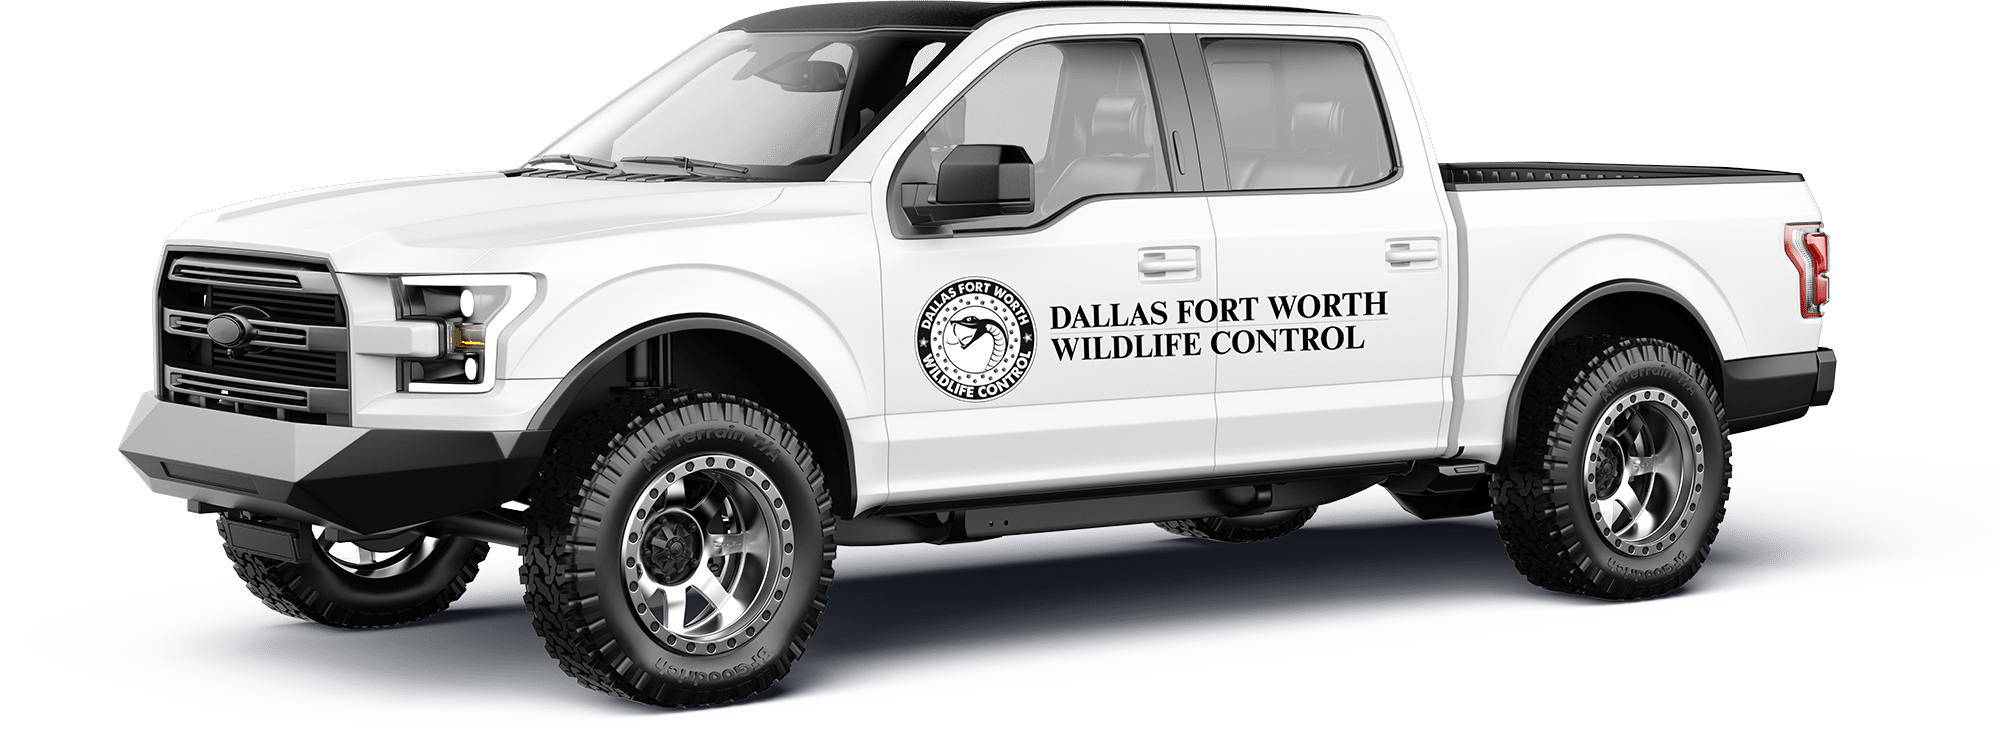 dfw-wildlife-truck-hero-2k